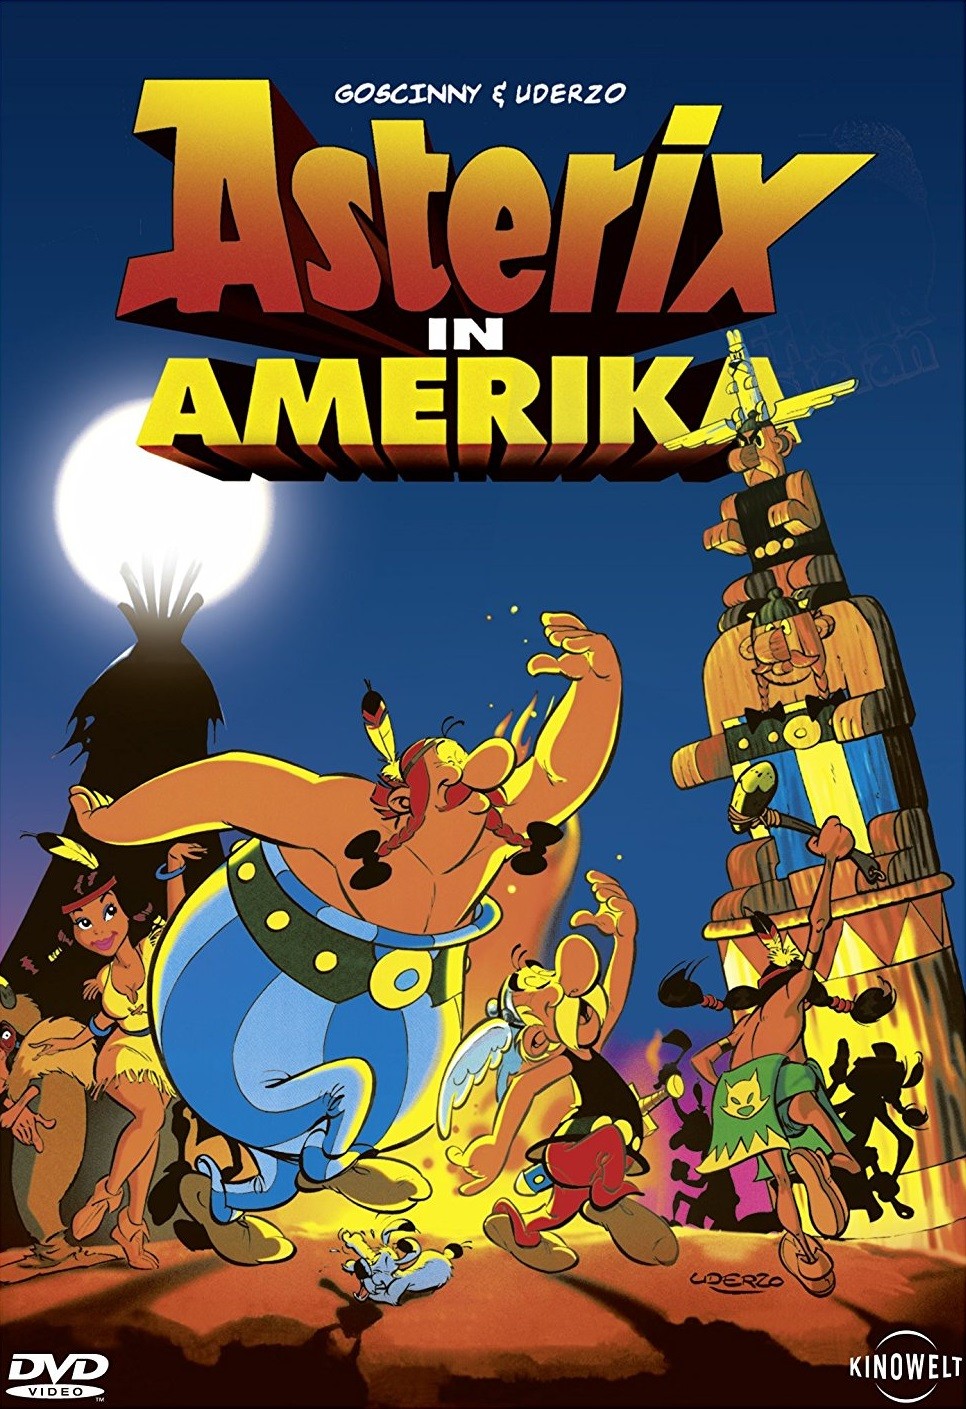 Астерикс завоевывает Америку: постер N208099